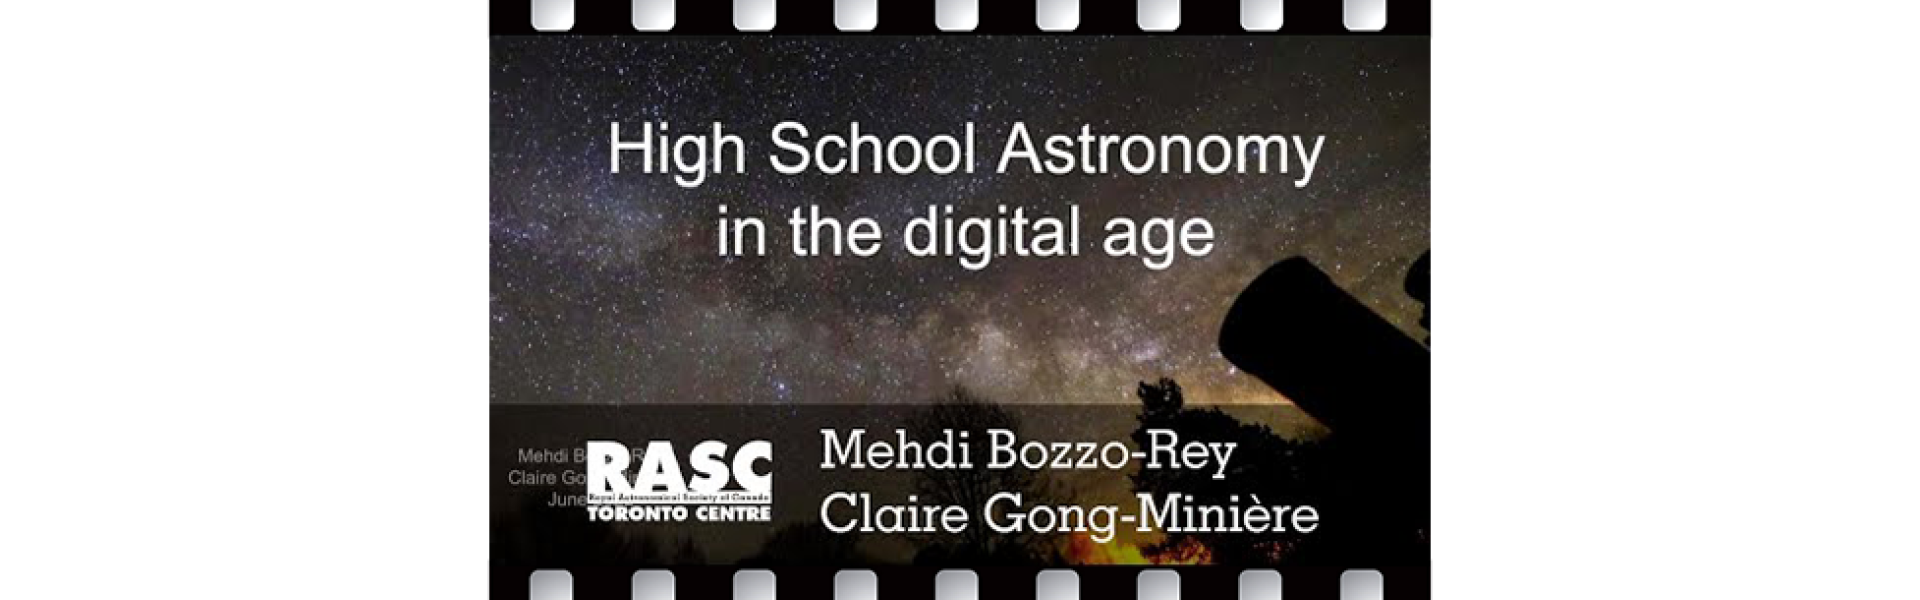 High School Astronomy in the Digital Age